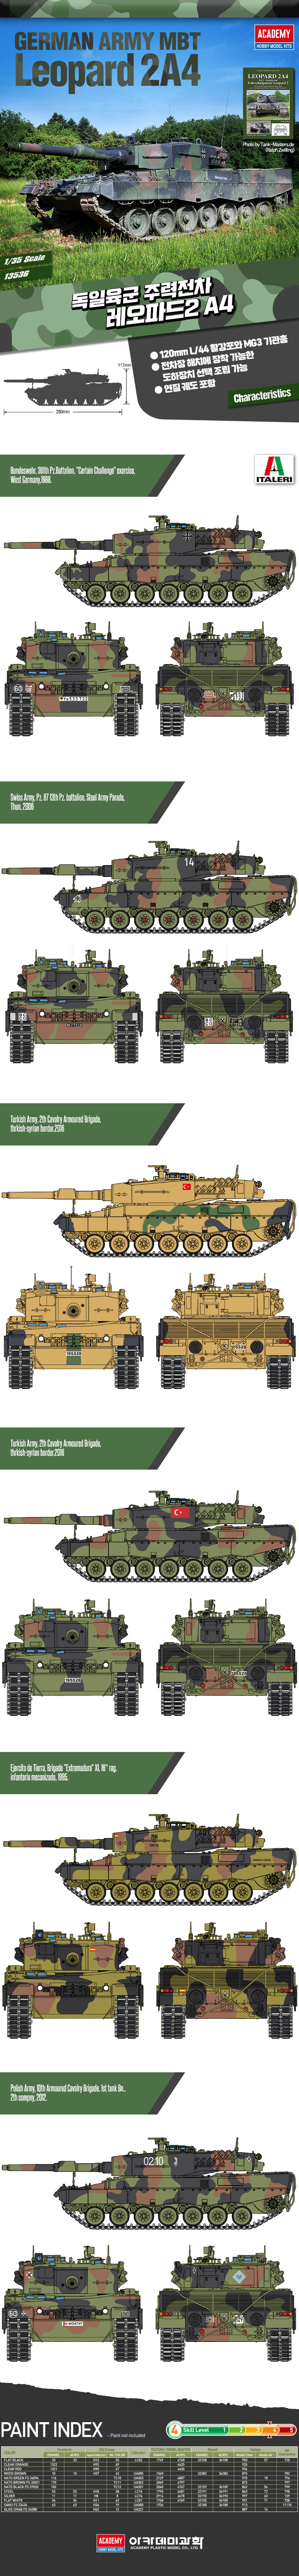 13536_German_MBT_Leopard_2A4_kor.jpg